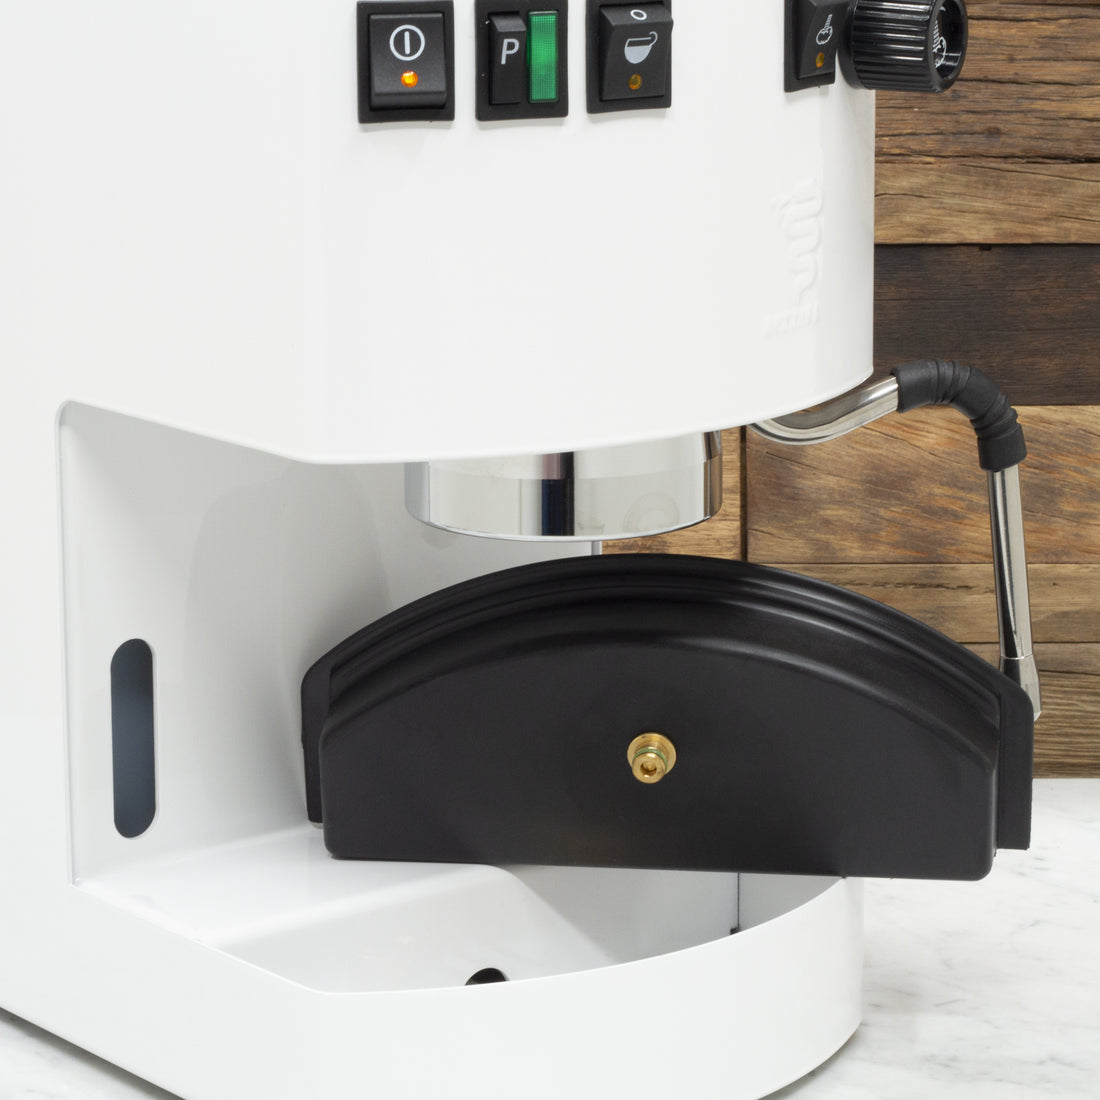 Bezzera New Hobby Espresso Machine in White